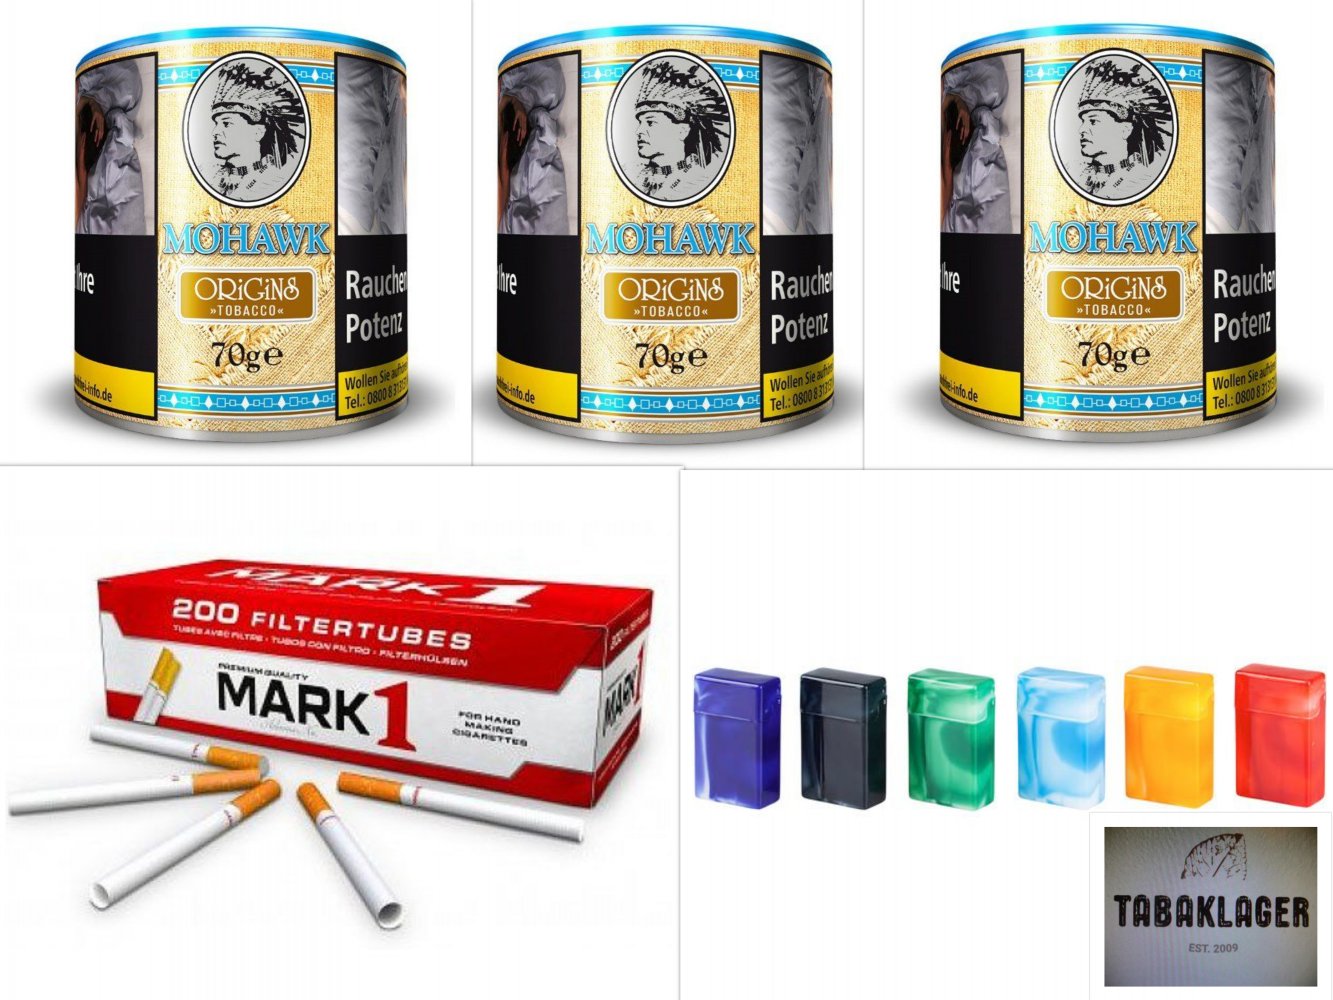 https://www.tabaklager.de/pic/3-x-70g-Zigarettentabak-Mohawk-Origins-Tabak-ohne-Zusaetze-200-Huelsen-und-1-Zigarettenbox.2838a.jpg